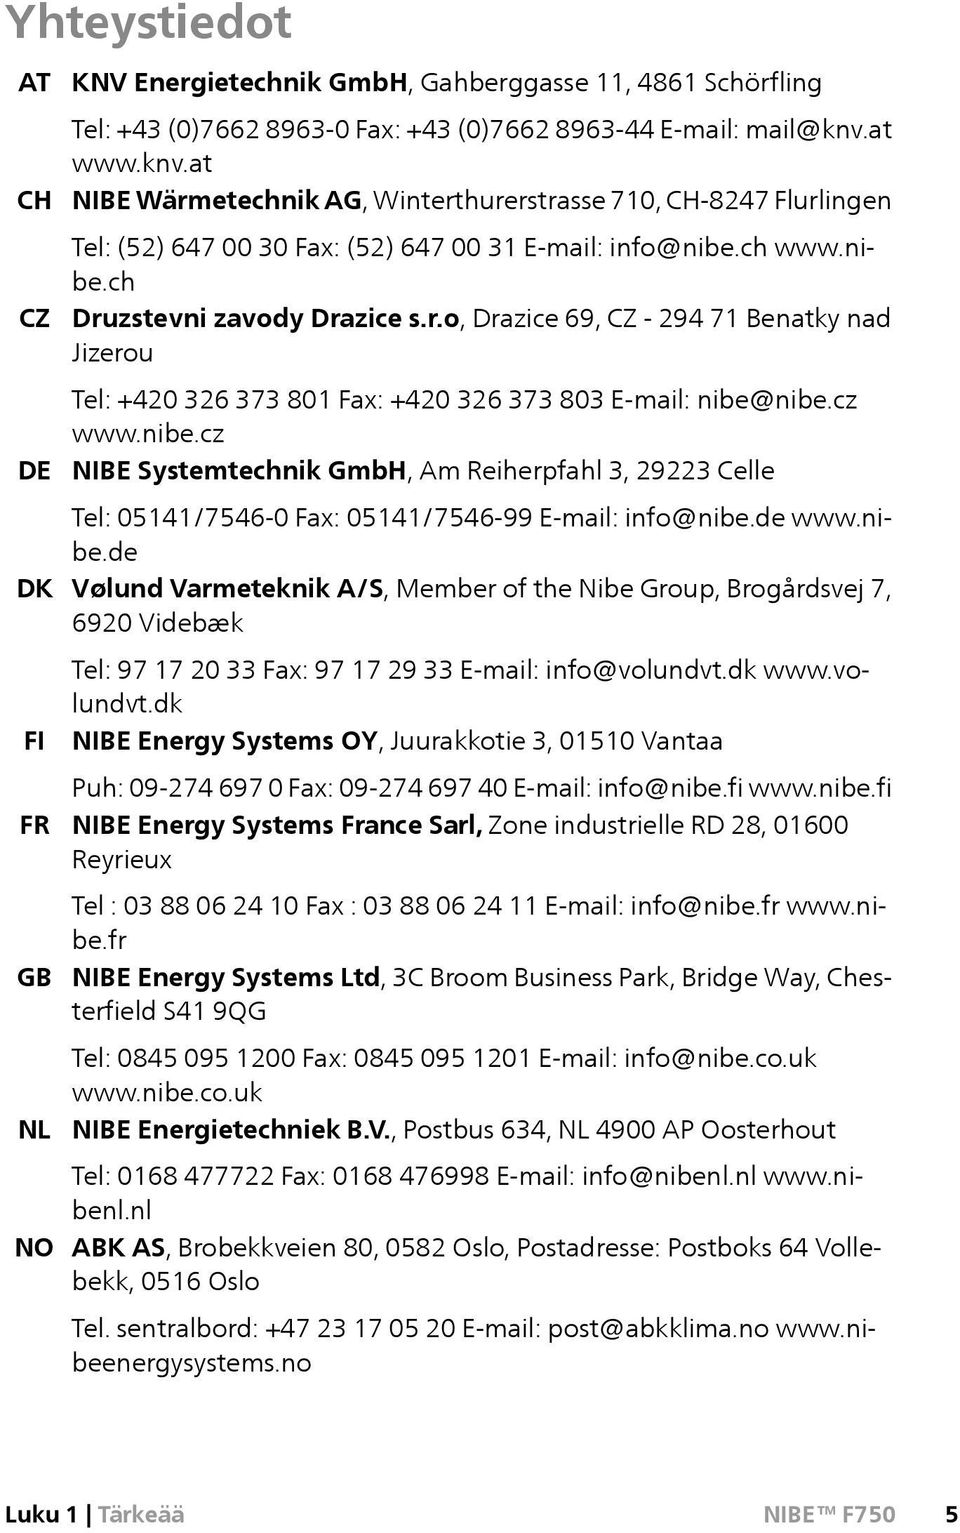 cz www.nibe.cz NIBE Systemtechnik GmbH, Am Reiherpfahl 3, 29223 Celle Tel: 05141/7546-0 Fax: 05141/7546-99 E-mail: info@nibe.de www.nibe.de Vølund Varmeteknik A/S, Member of the Nibe Group, Brogårdsvej 7, 6920 Videbæk Tel: 97 17 20 33 Fax: 97 17 29 33 E-mail: info@volundvt.